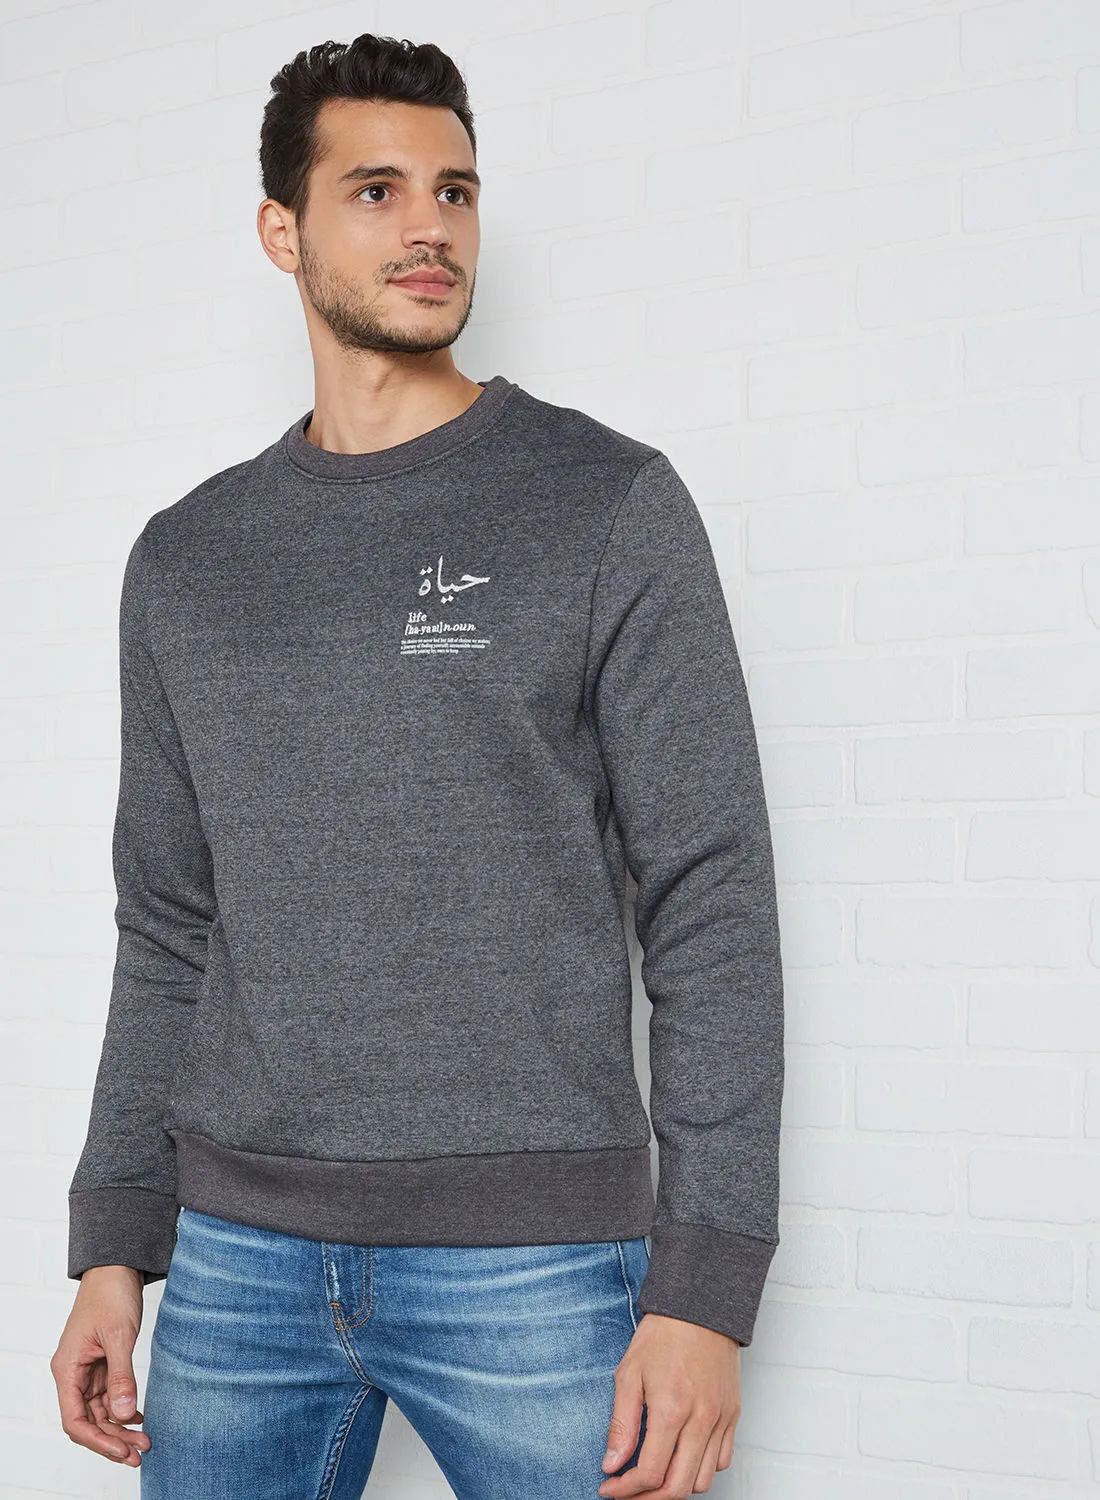 STATE 8 Arabic Word Embroidered Sweatshirt Grey